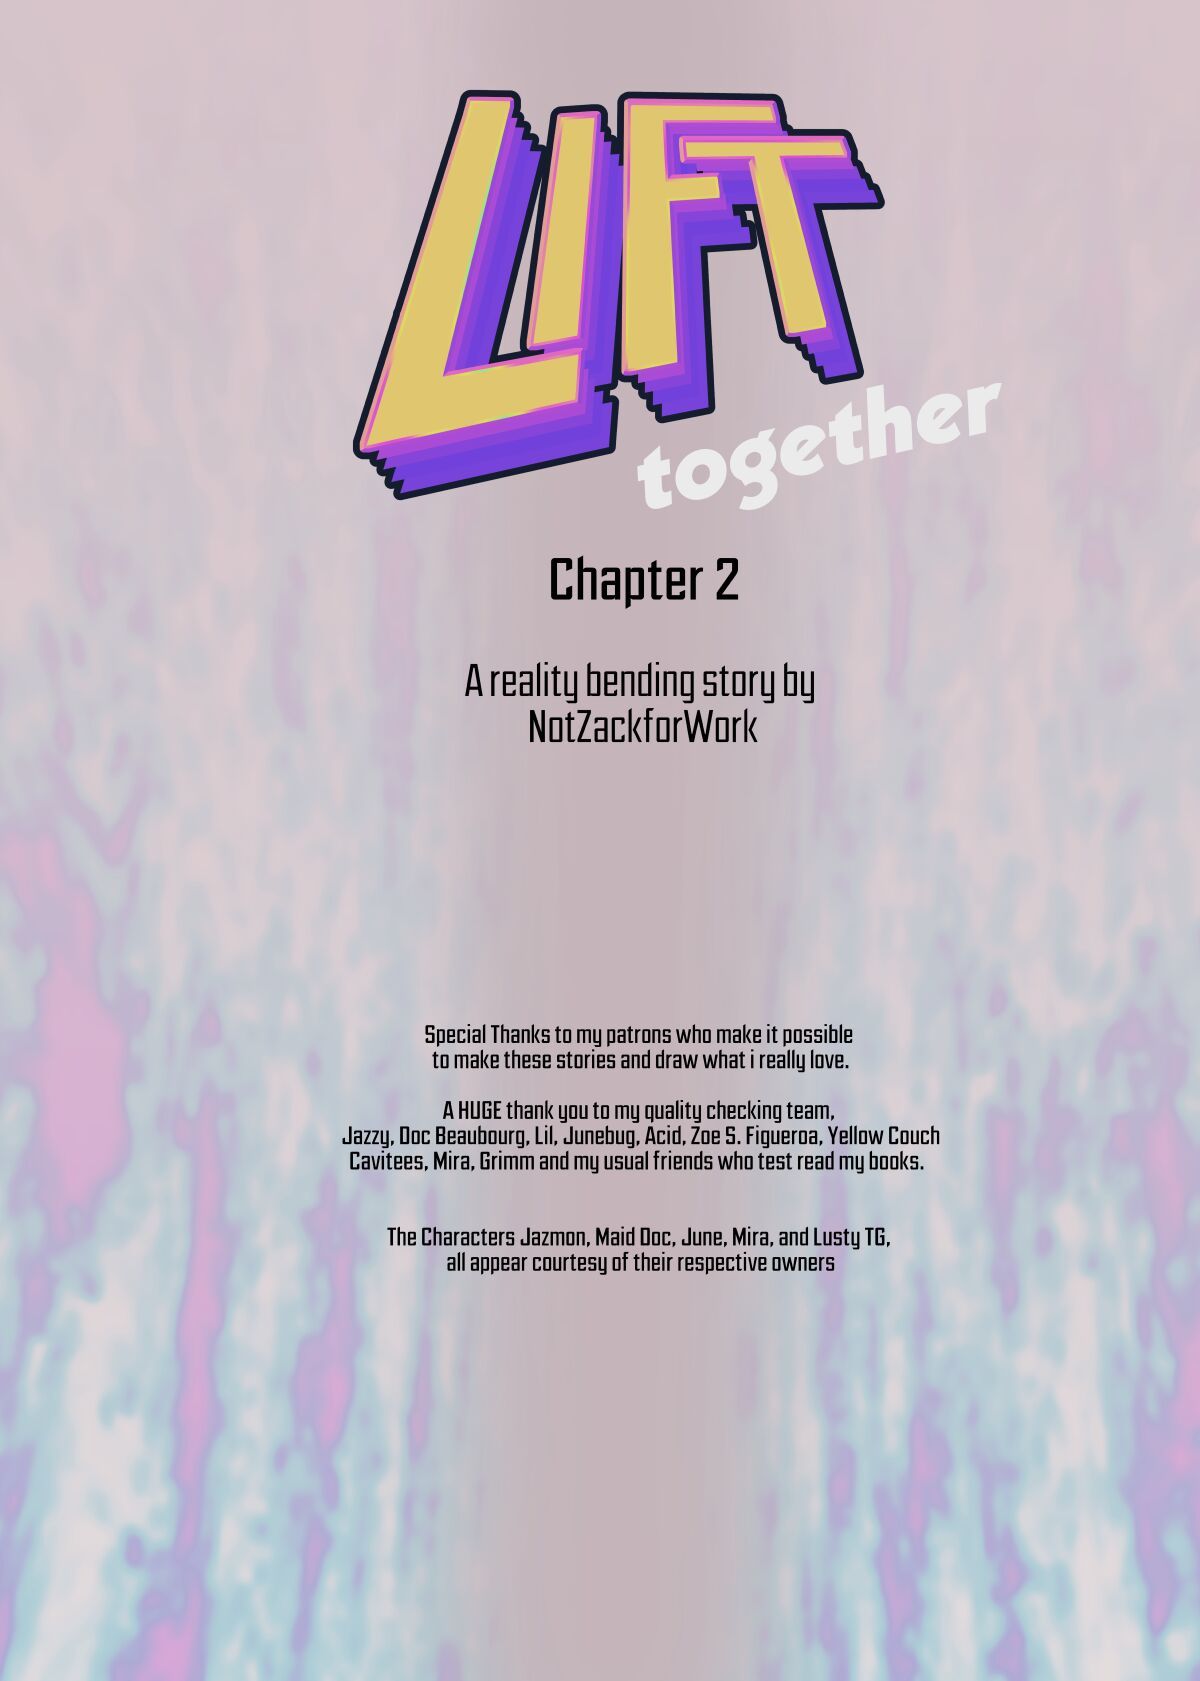 [Notzackforwork] Lift: Together (Chapter 2) (Official post - Ongoing) 3